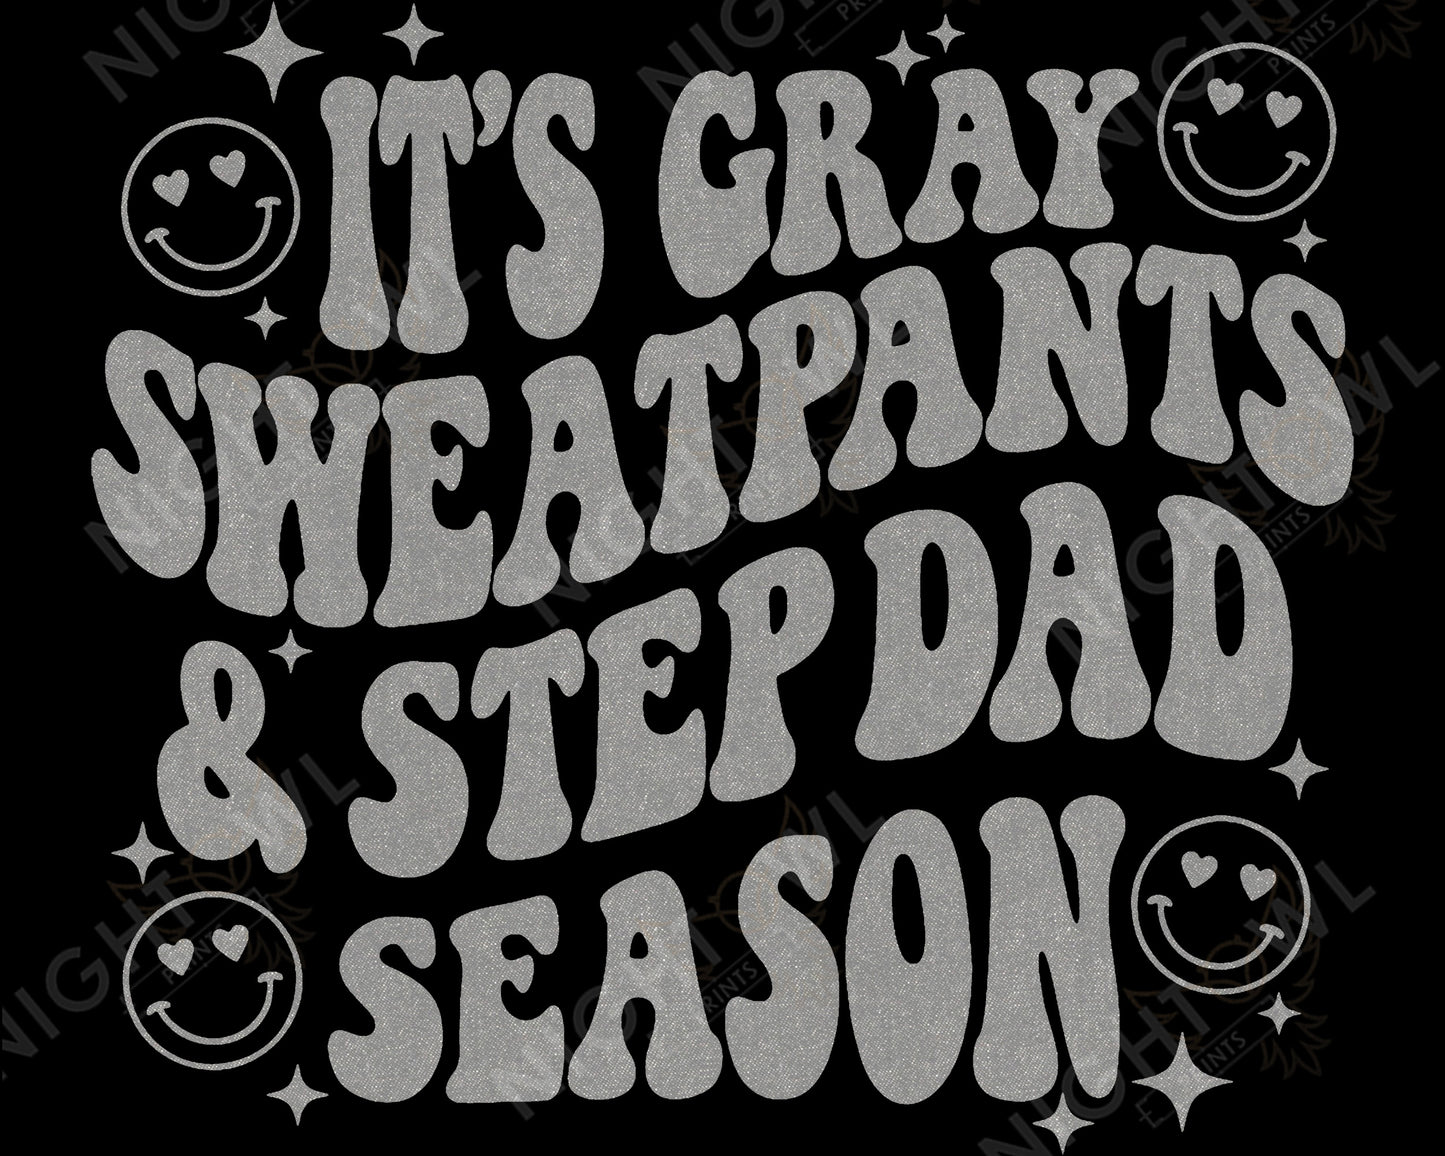 Digital Download file PNG. It's Gray Sweatpants and Step Dad Season. 300 DPI.  Print ready file.